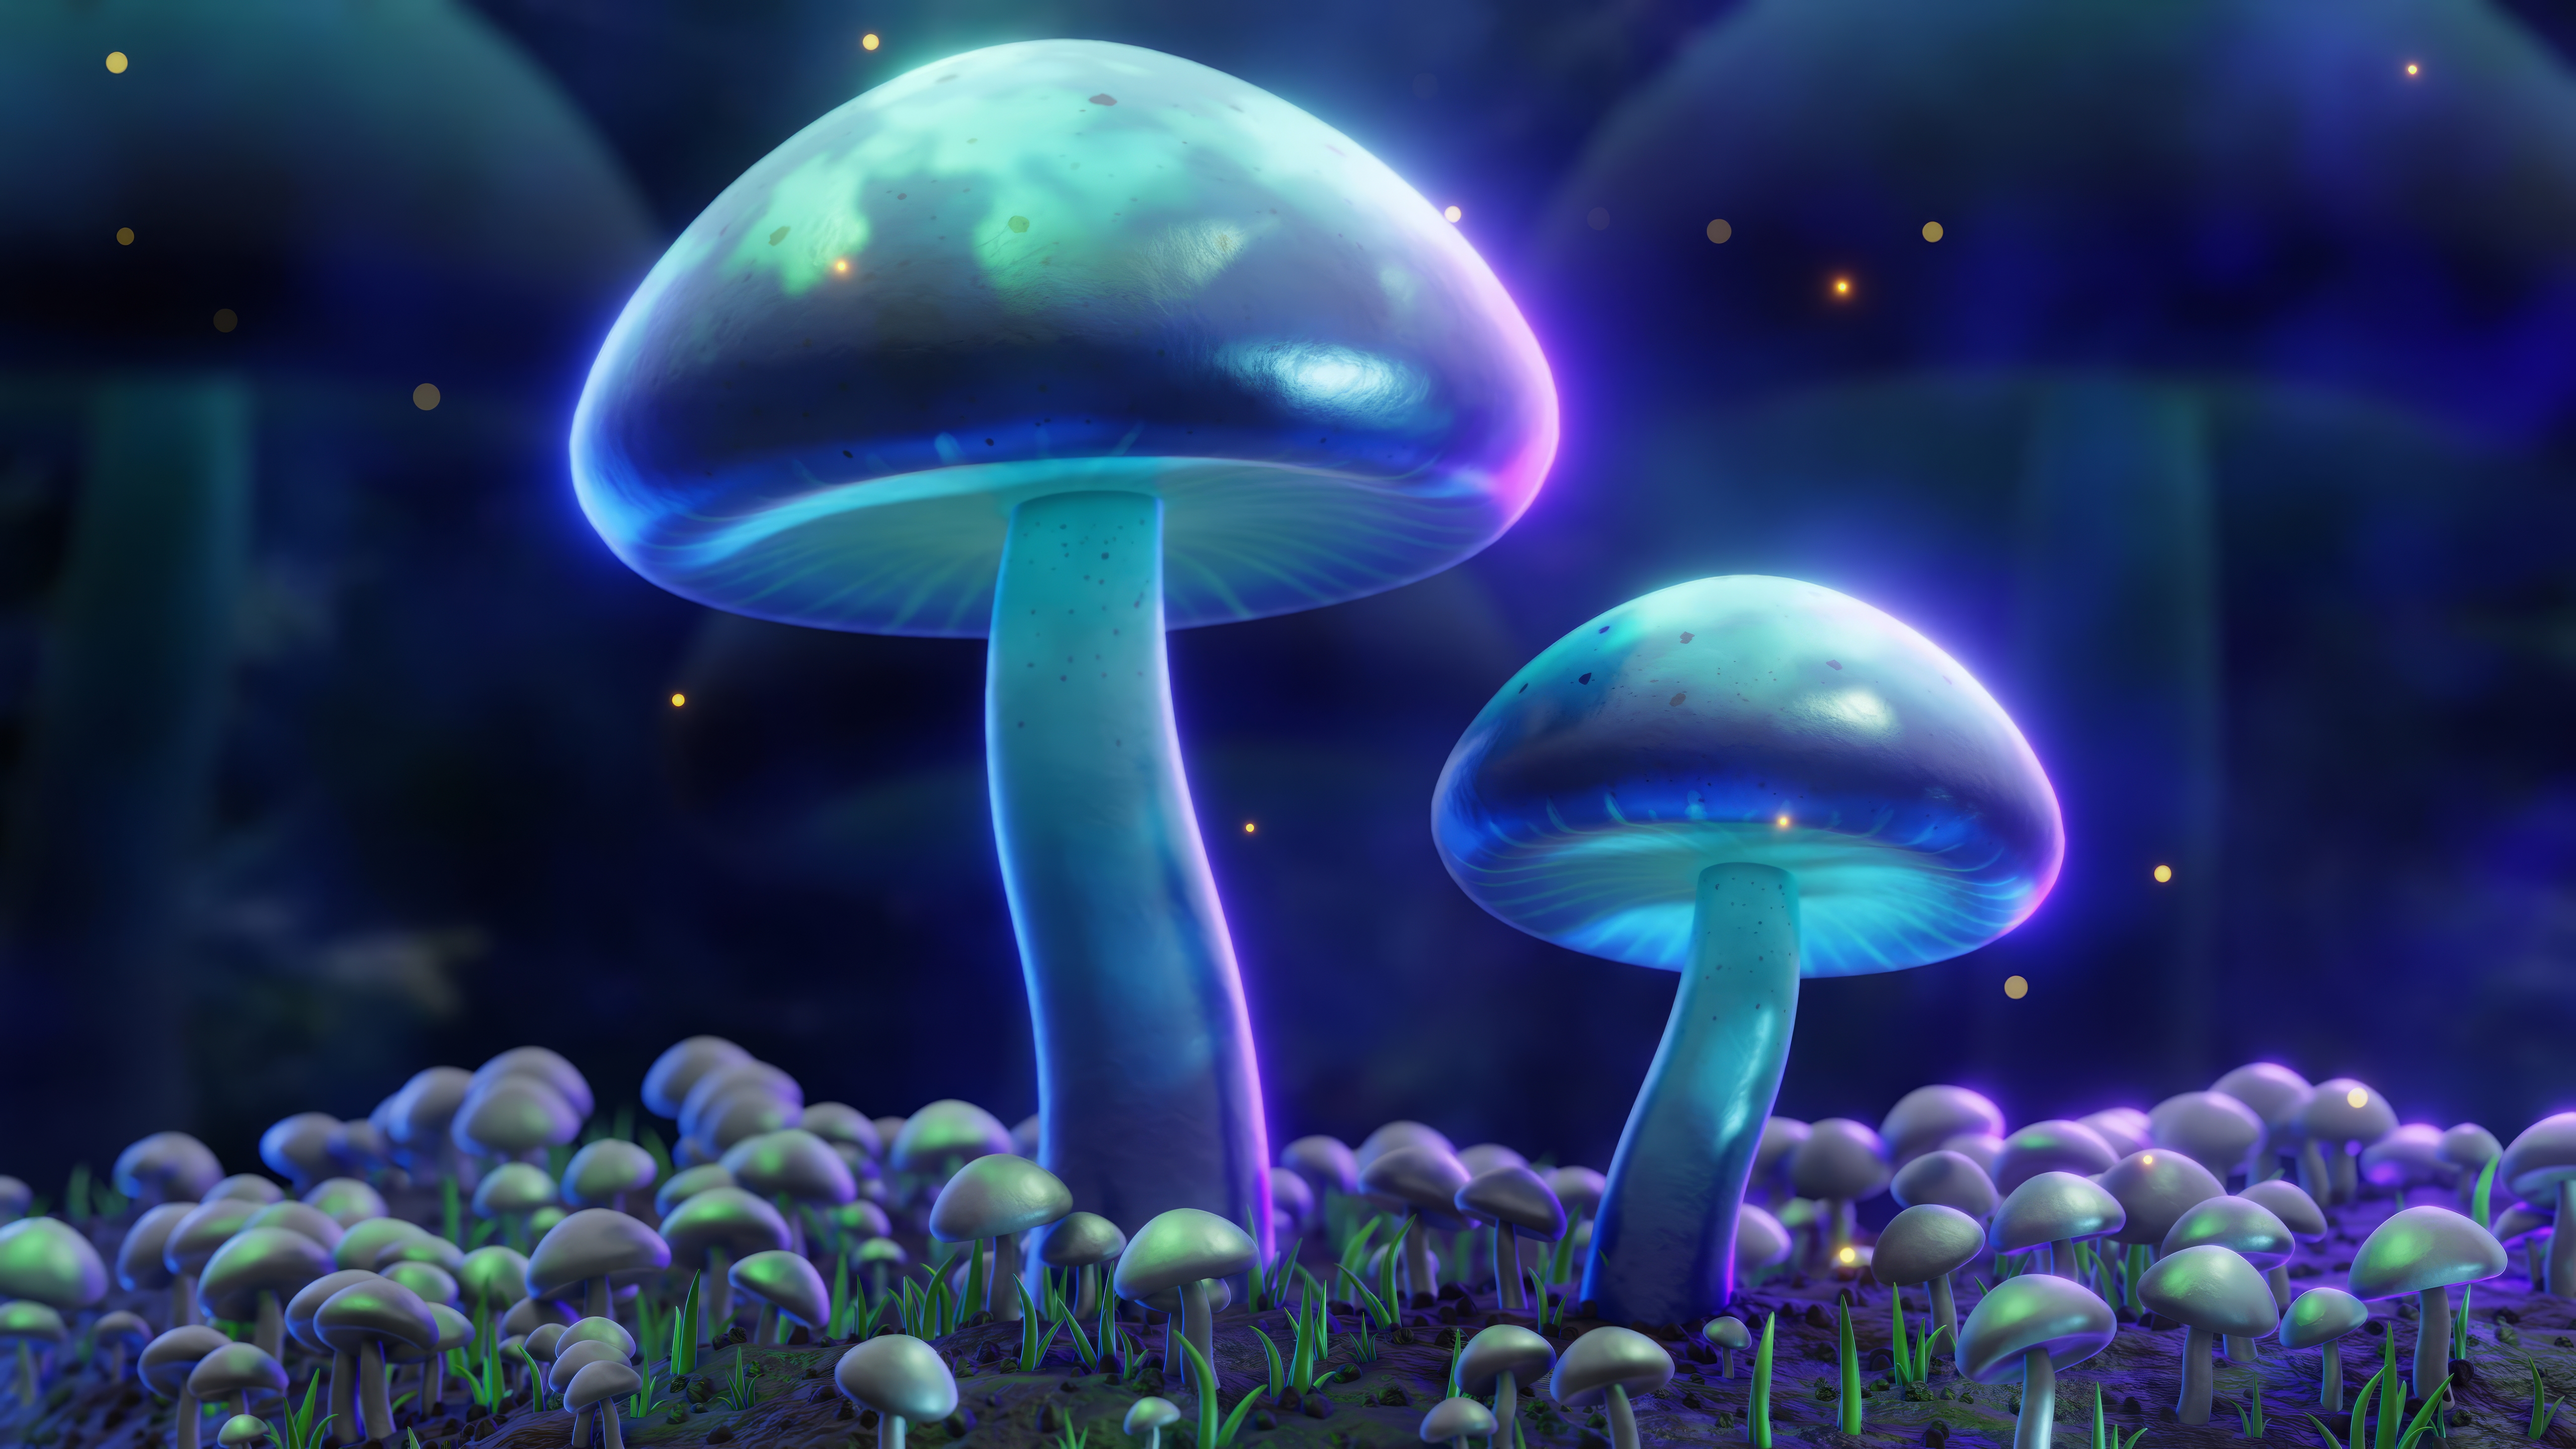 General 5120x2880 mushroom neon bright turquoise blue night CGI grass digital art closeup